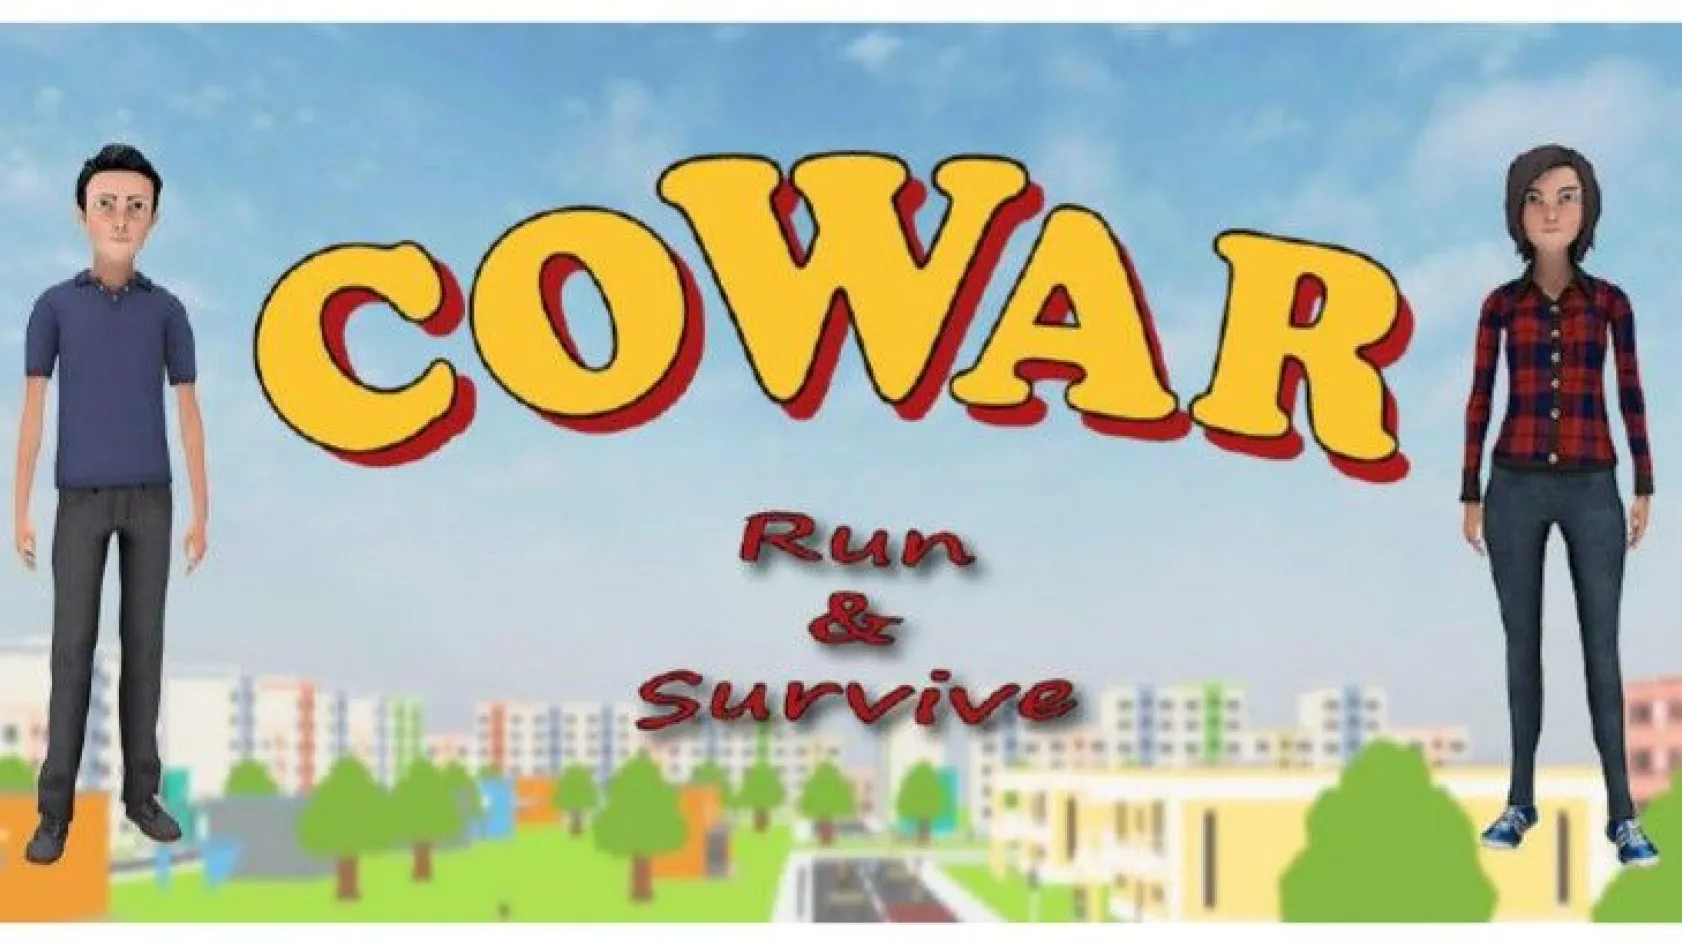 Covid-19 temalı COWAR oyunu yayınlandı!